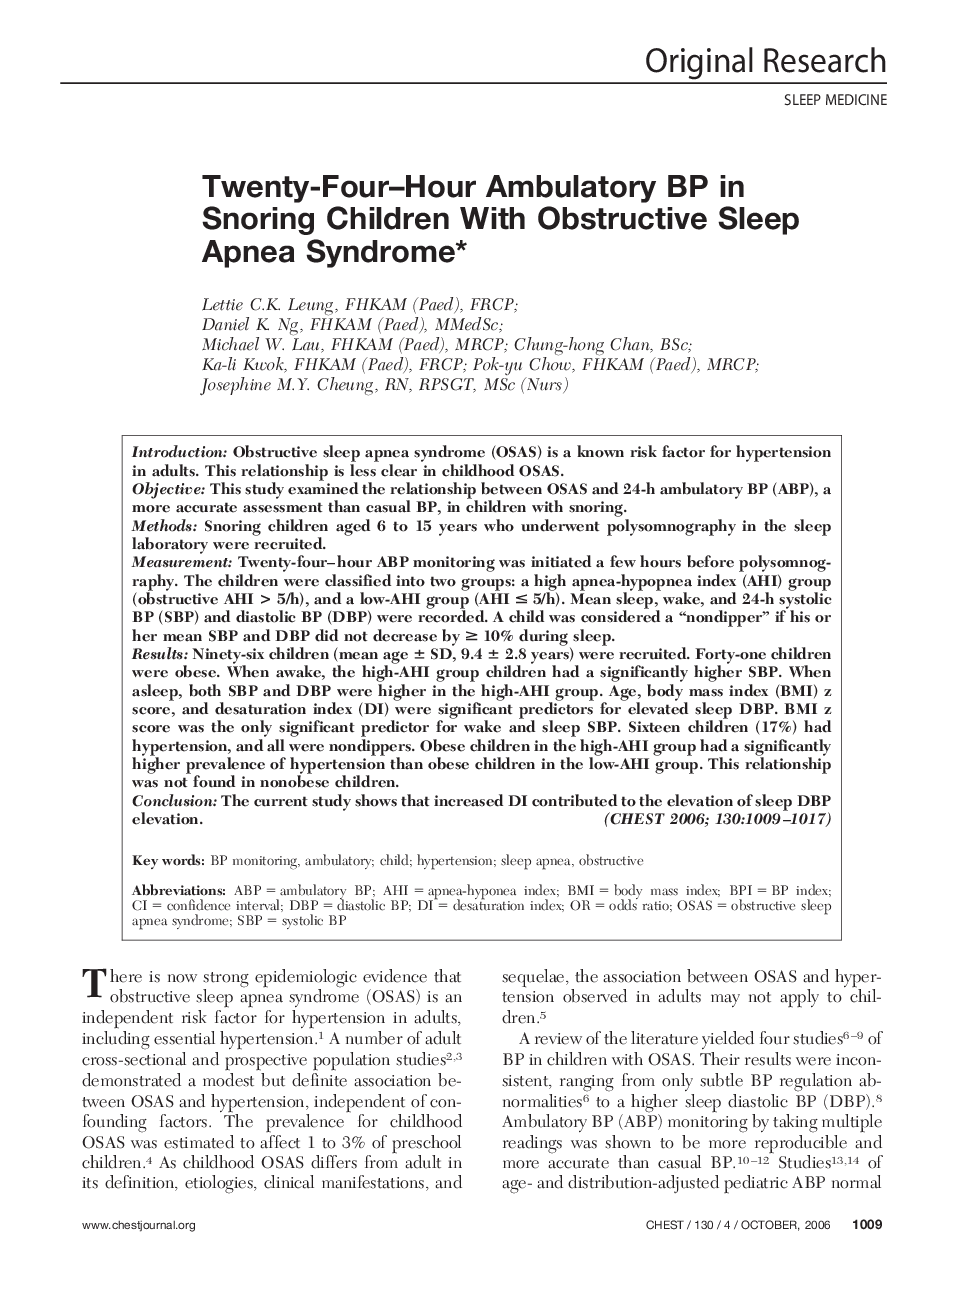 Twenty-Four-Hour Ambulatory BP in Snoring Children With Obstructive Sleep Apnea Syndrome